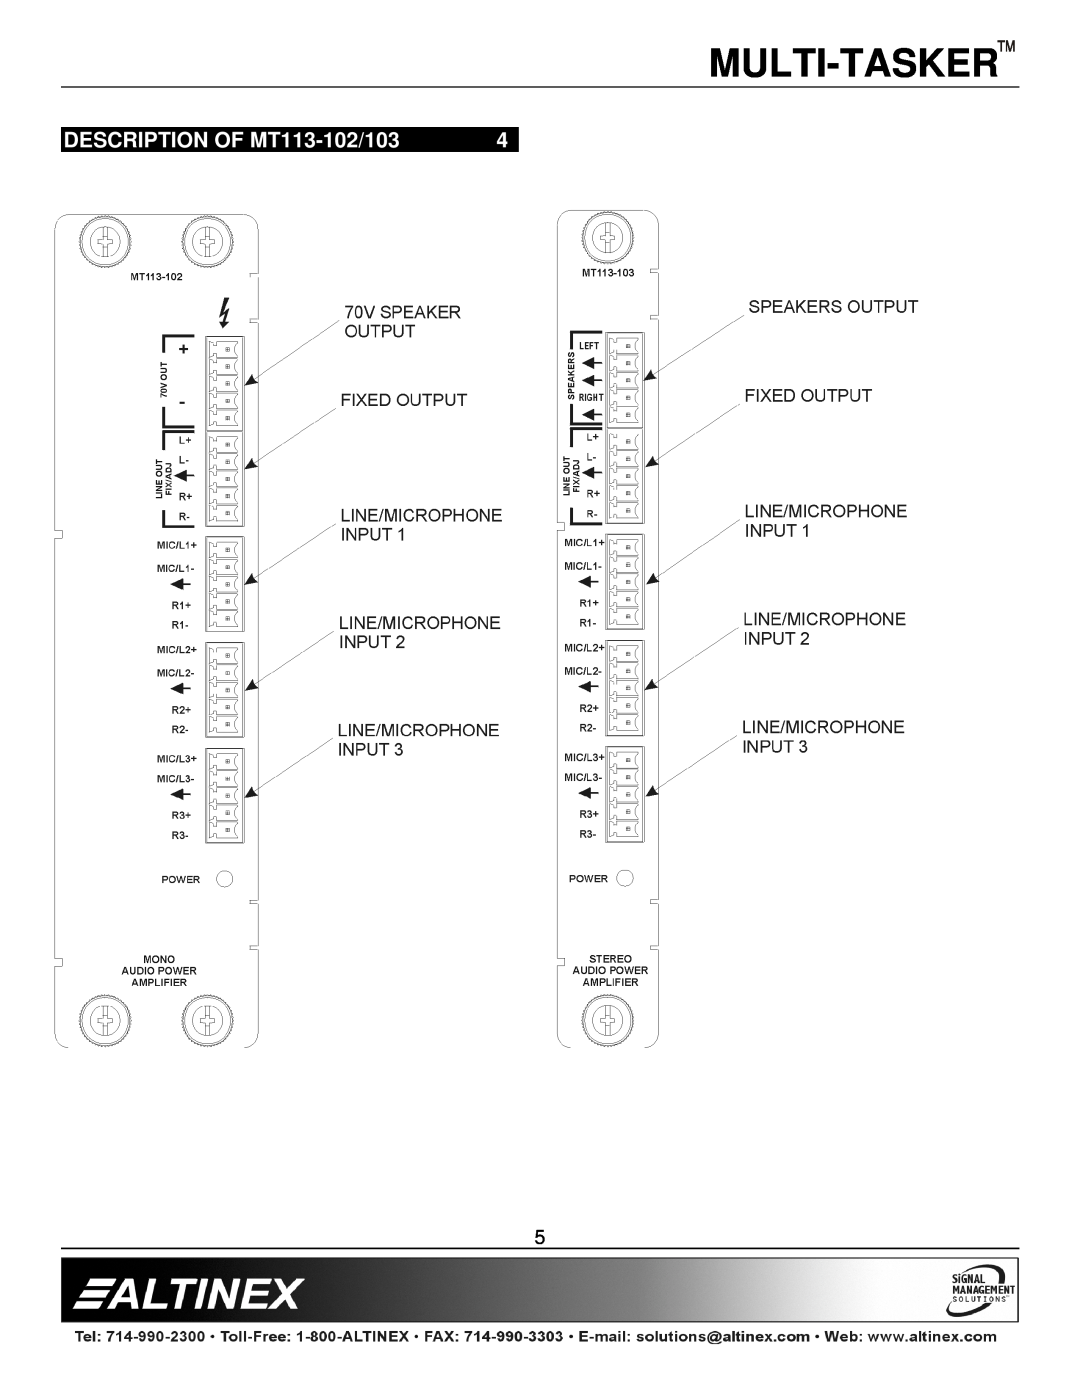 Altinex manual DESCRIPTION OF MT113-102/103, Multi-Tasker 